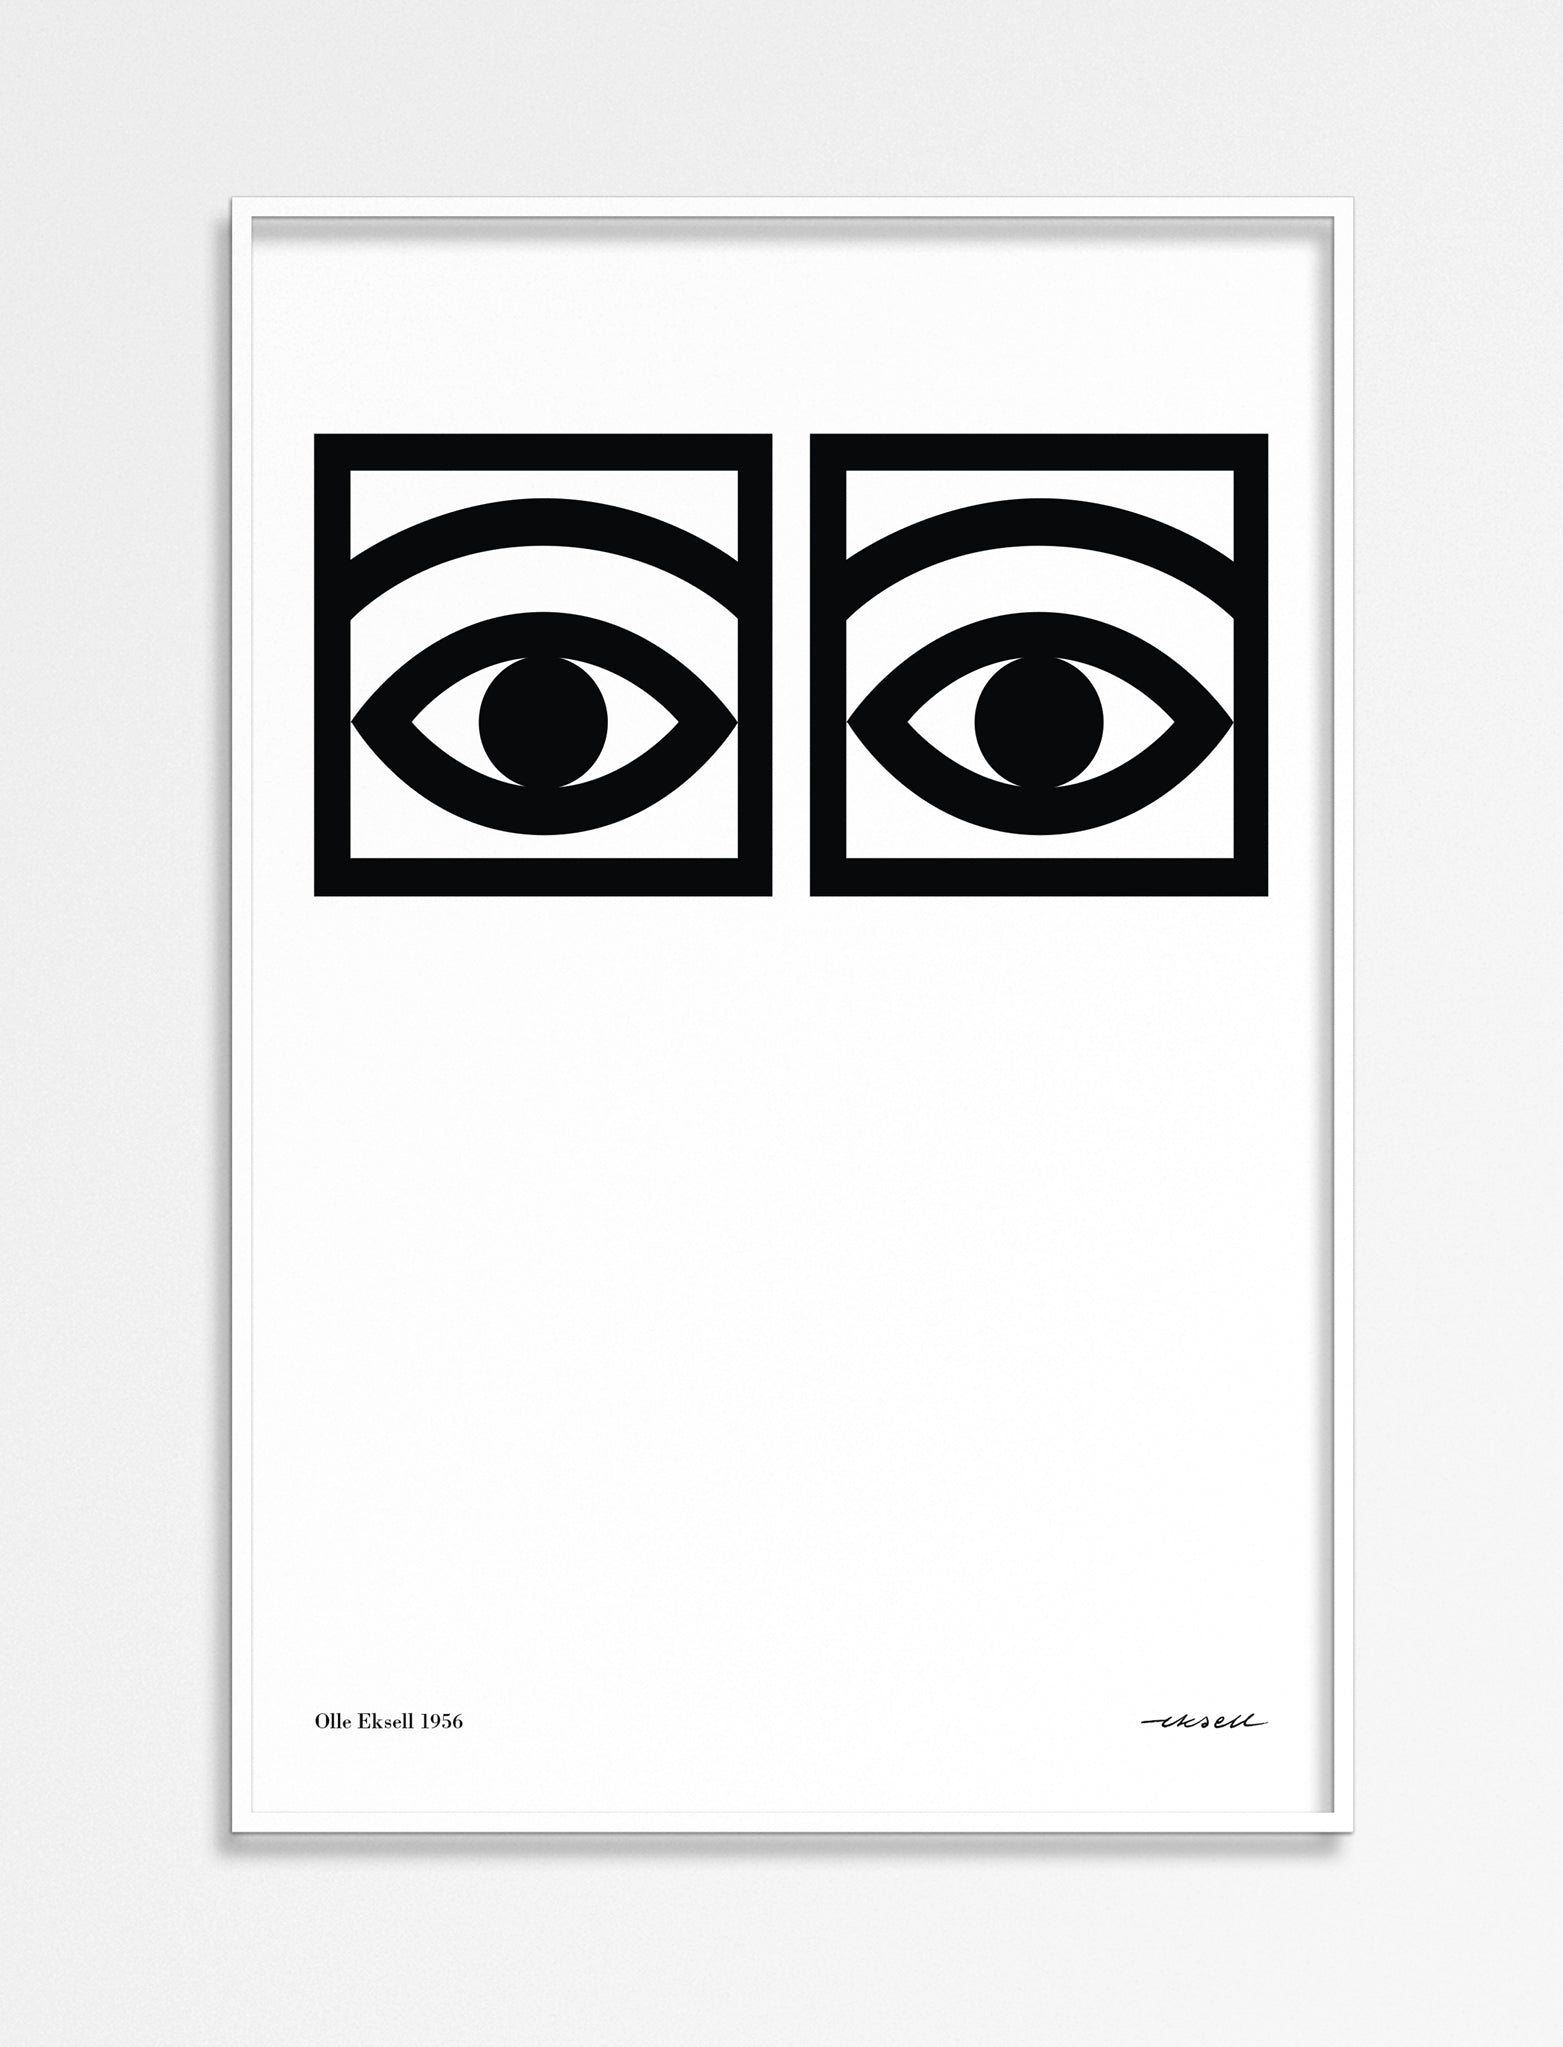 Ögon - 1956 - One Eye - Black and white 50x70